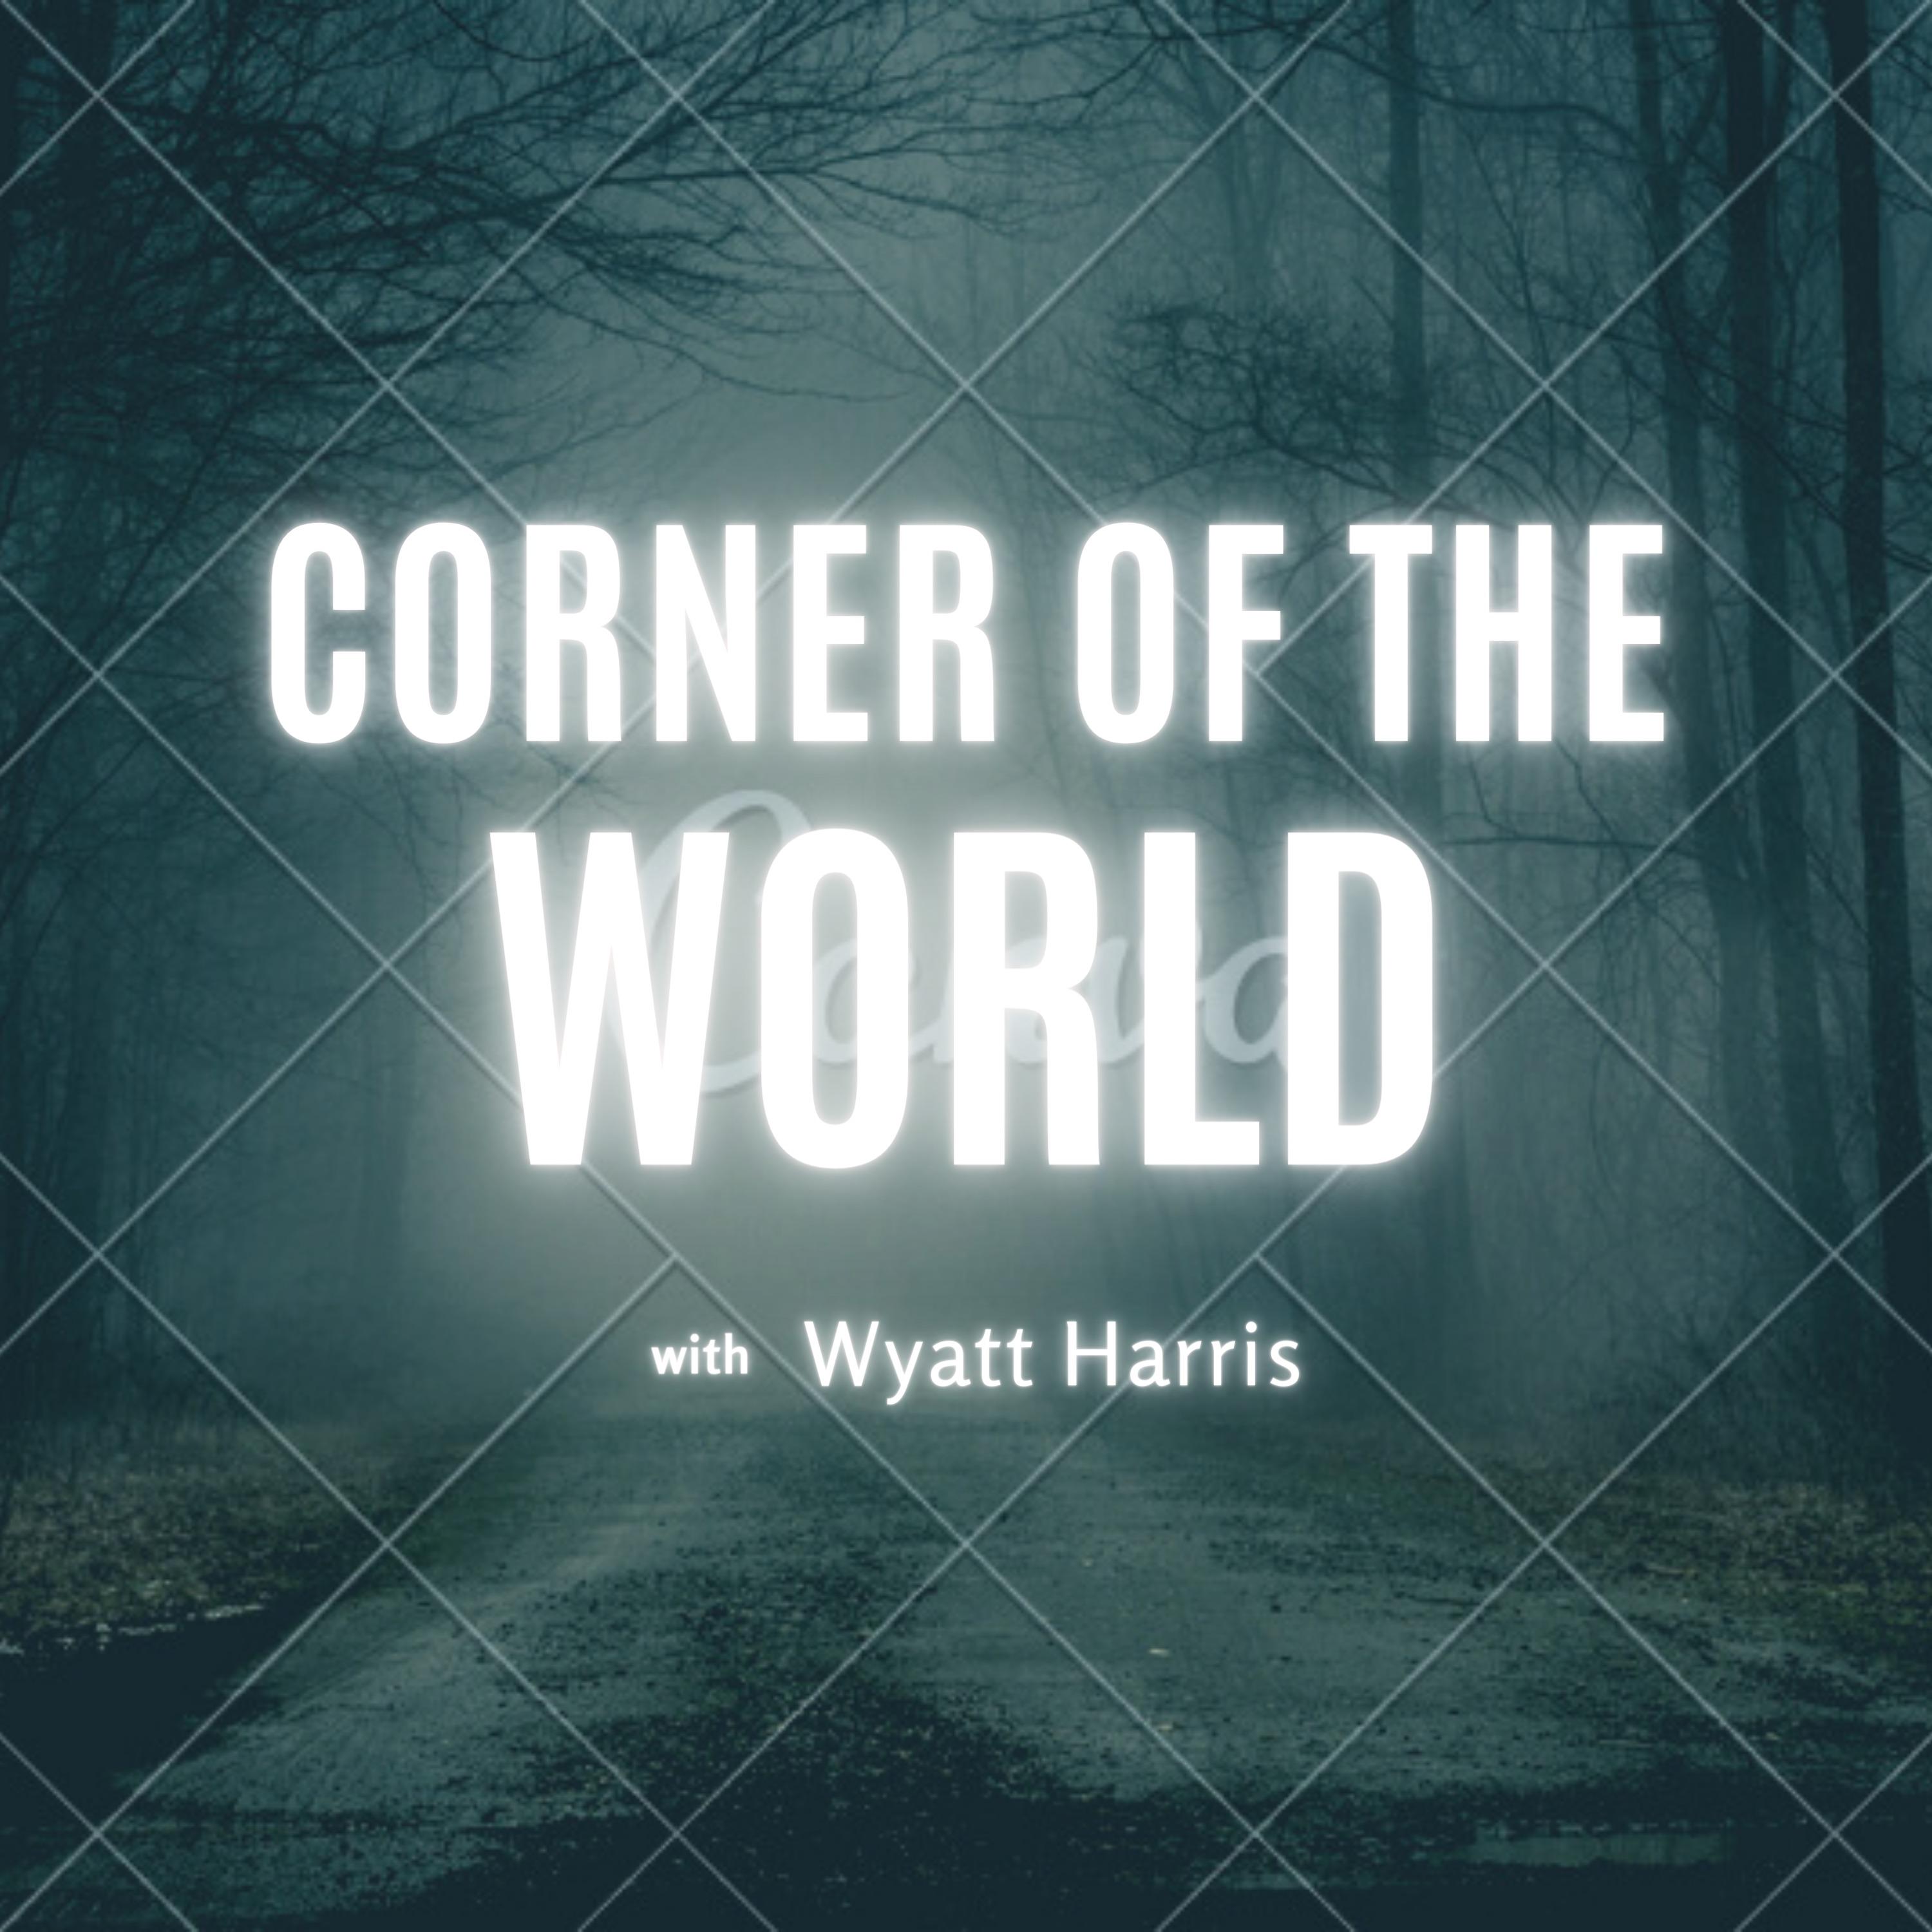 Corner of the world